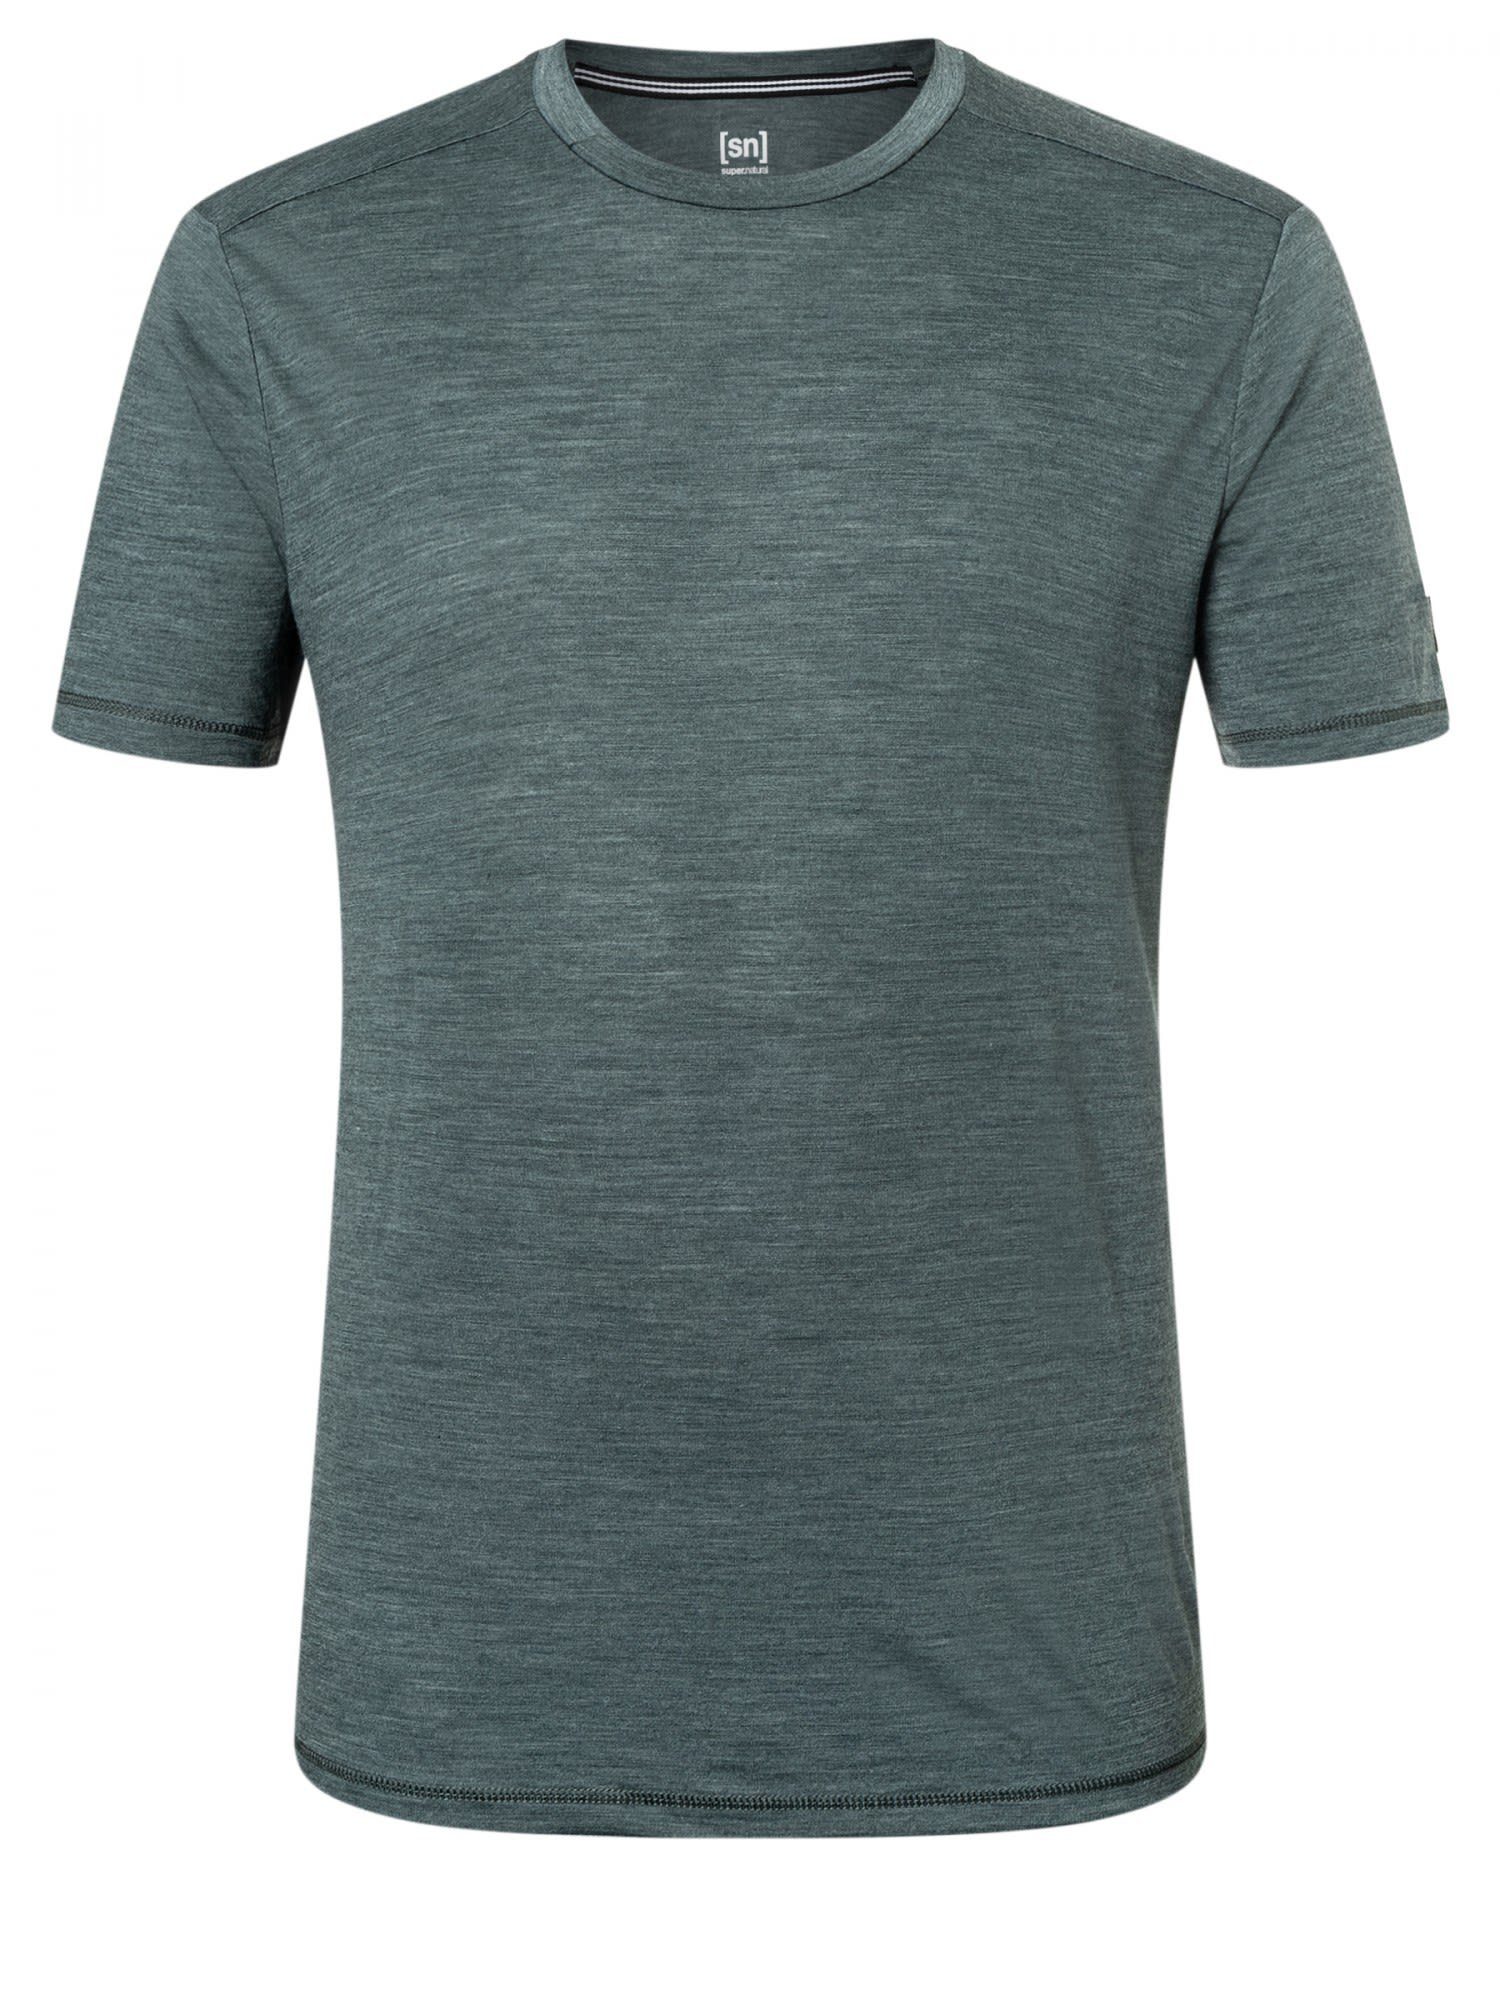 Essential SUPER.NATURAL Melange Urban Short-sleeve Herren Chic Super.natural T-Shirt M